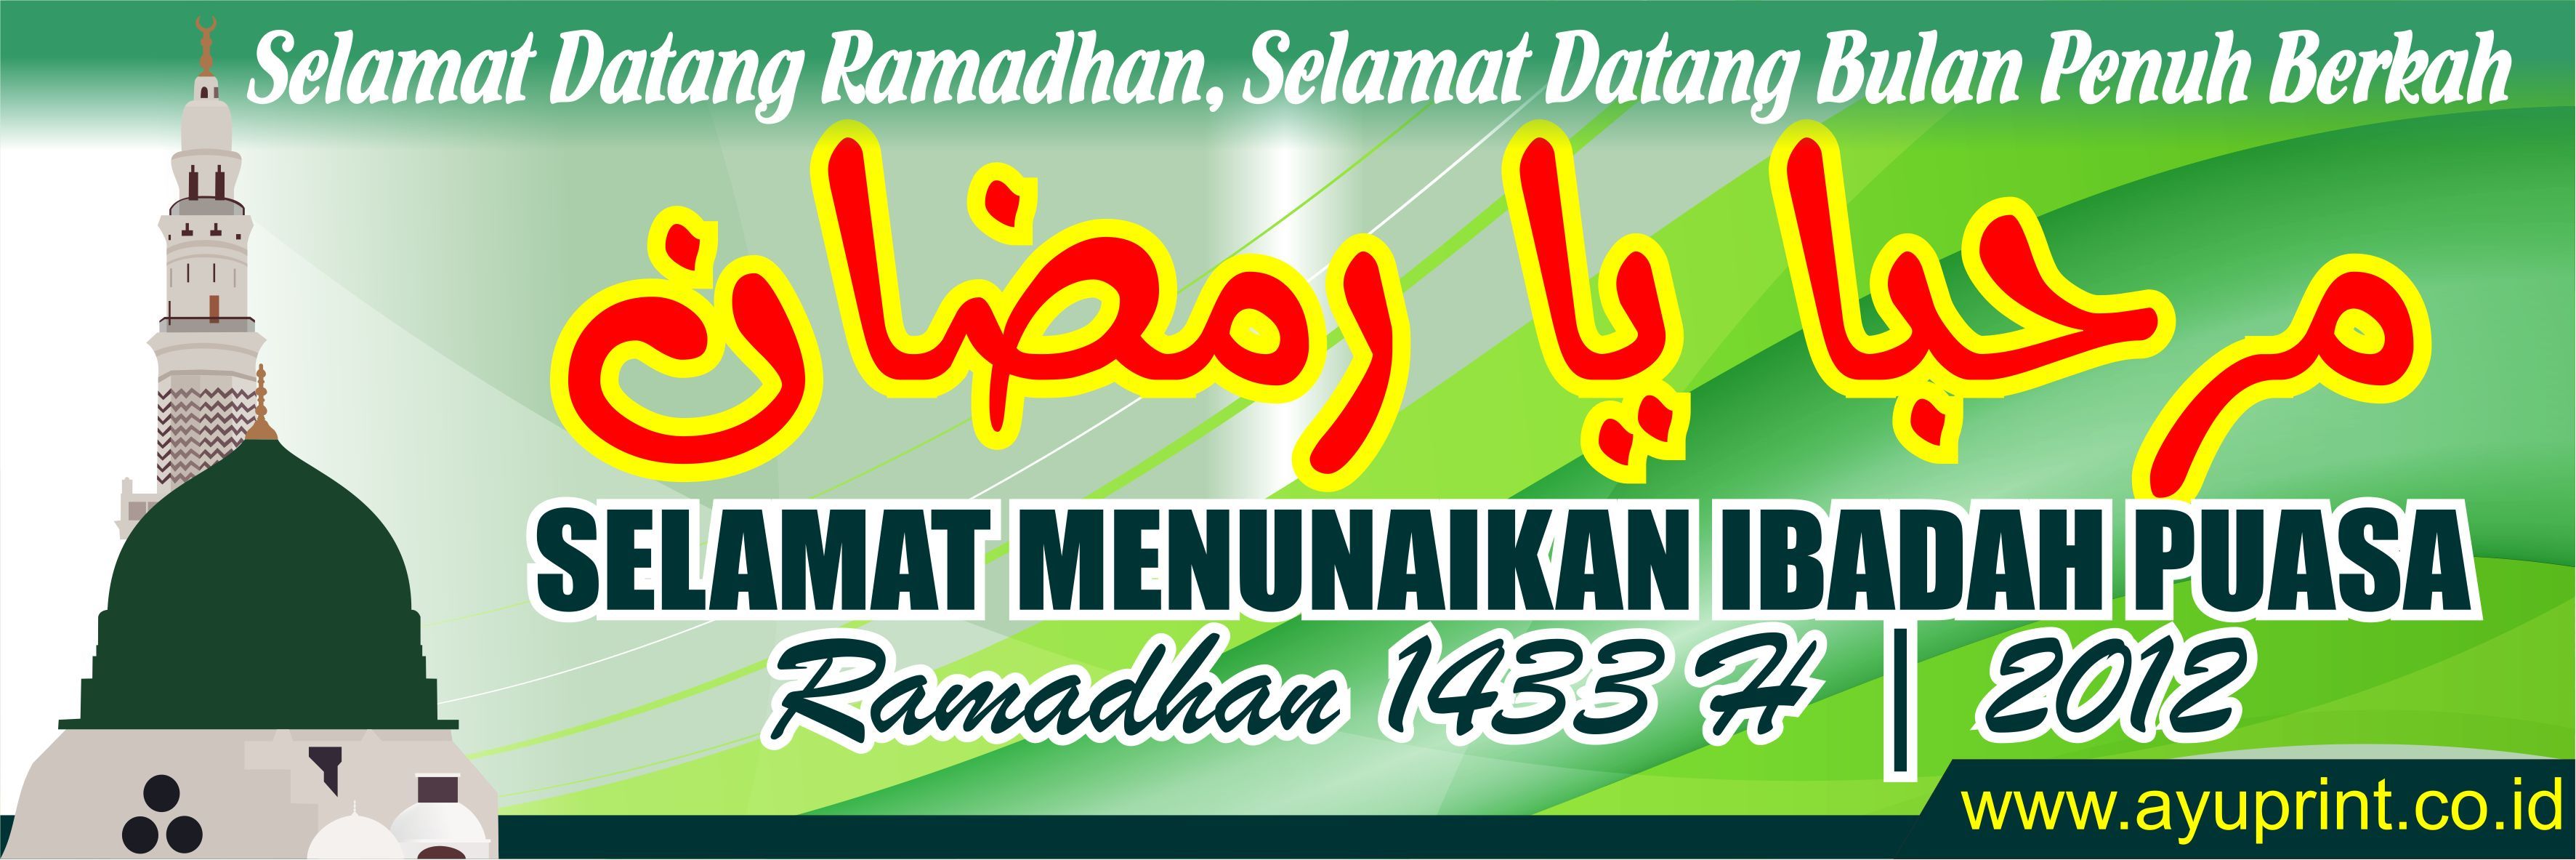 Banner Ramadhan Cdr